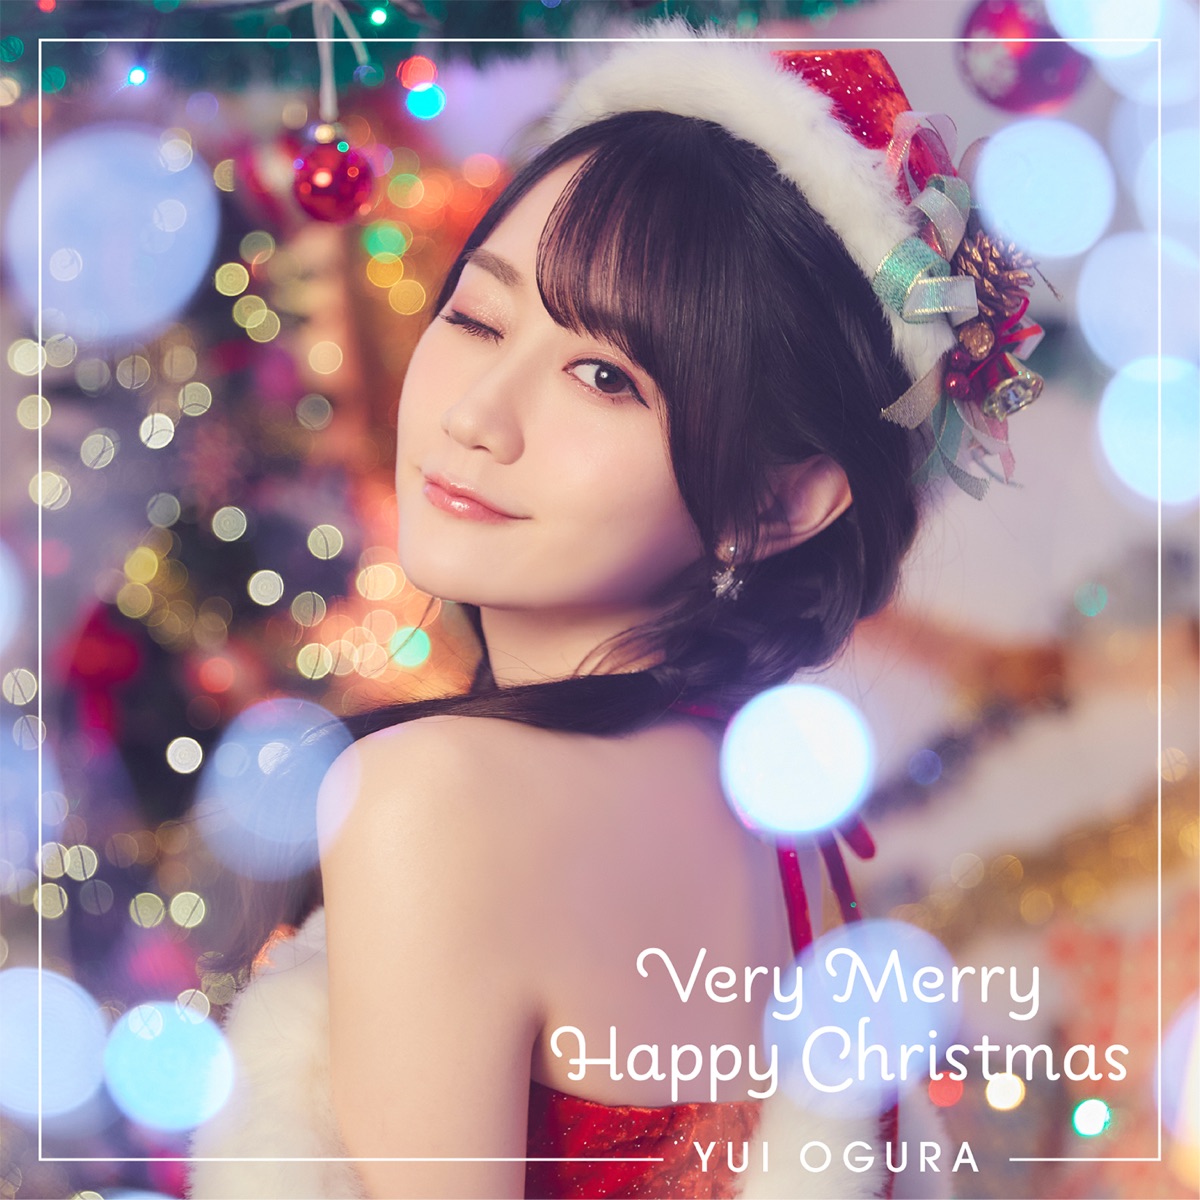 『小倉唯 - Very Merry Happy Christmas 歌詞』収録の『Very Merry Happy Christmas』ジャケット